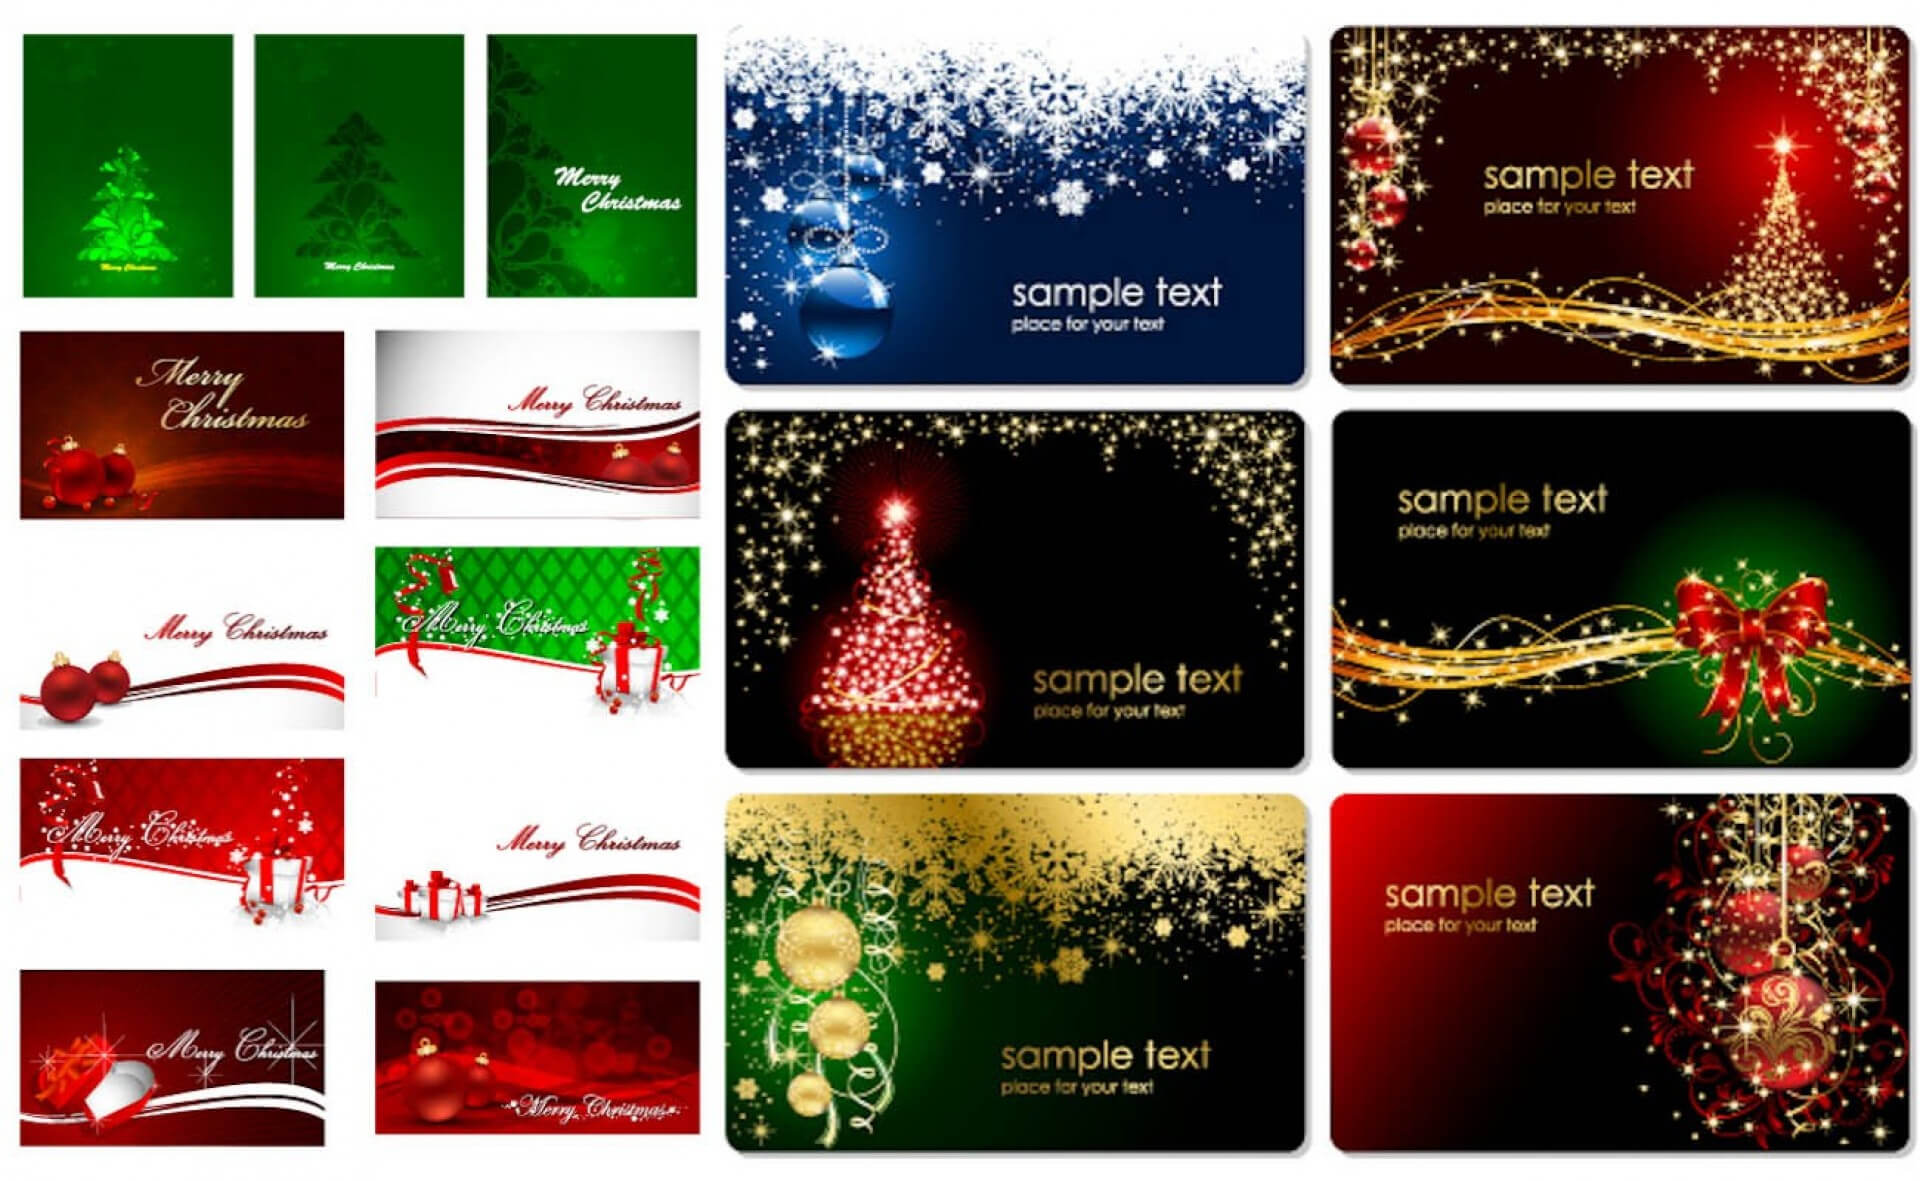 001 Christmas Card Templates For Photoshop Template Throughout Free Christmas Card Templates For Photoshop